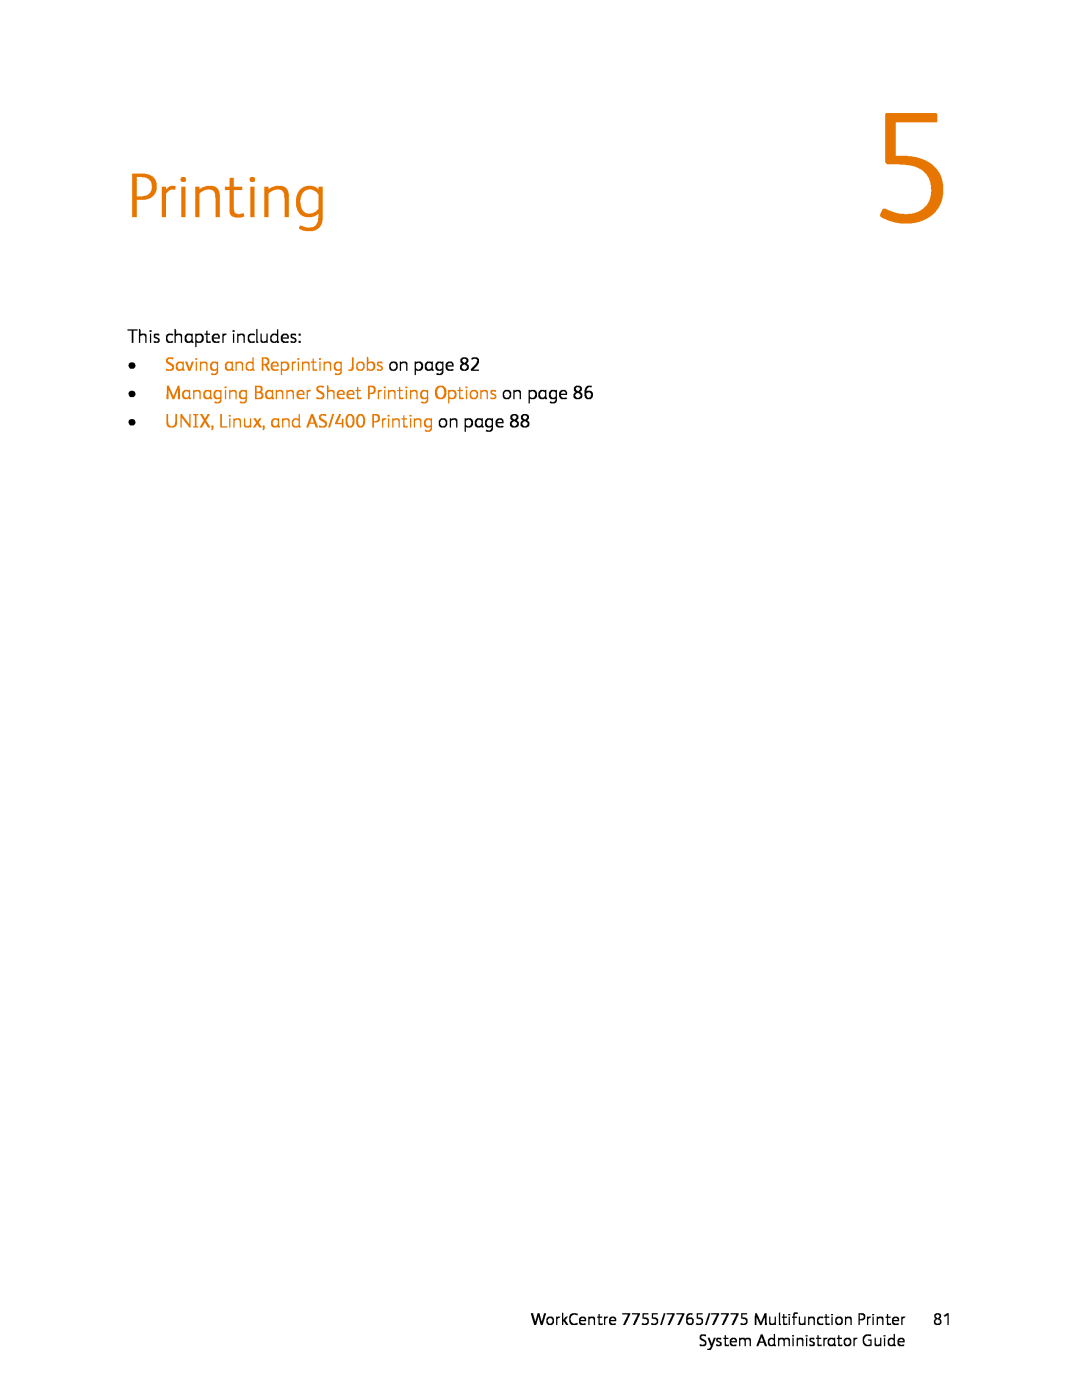 Xerox 7765, 7755, 7775 manual Printing5, •Saving and Reprinting Jobs on page, •Managing Banner Sheet Printing Options on page 